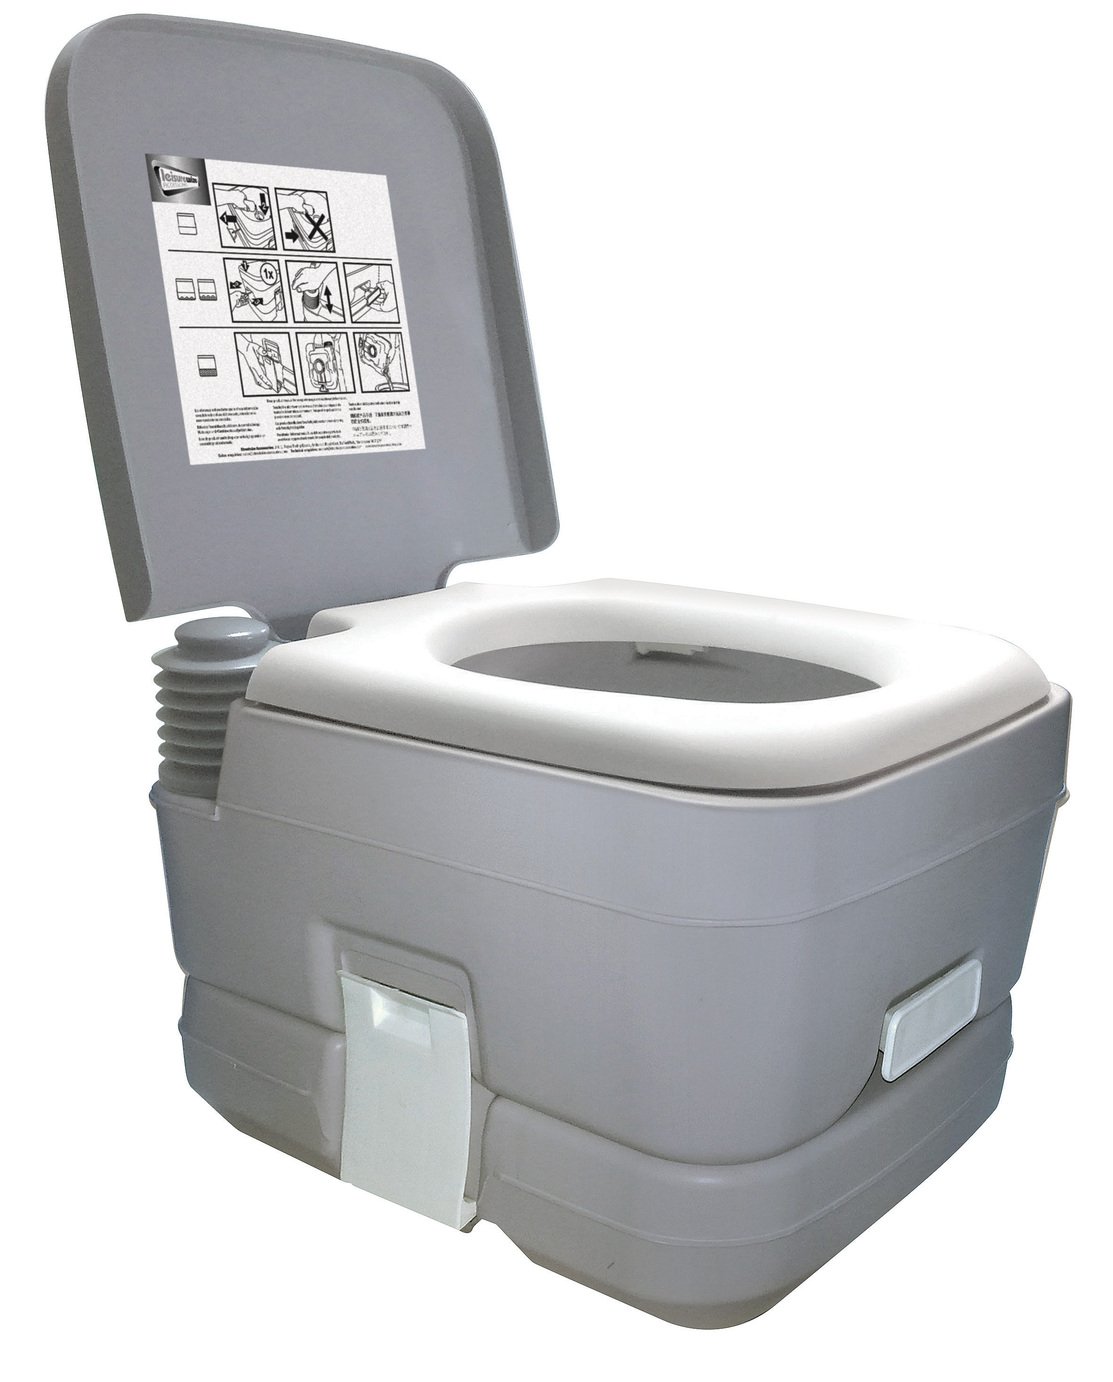 10-Litre Portable Flushing Toilet